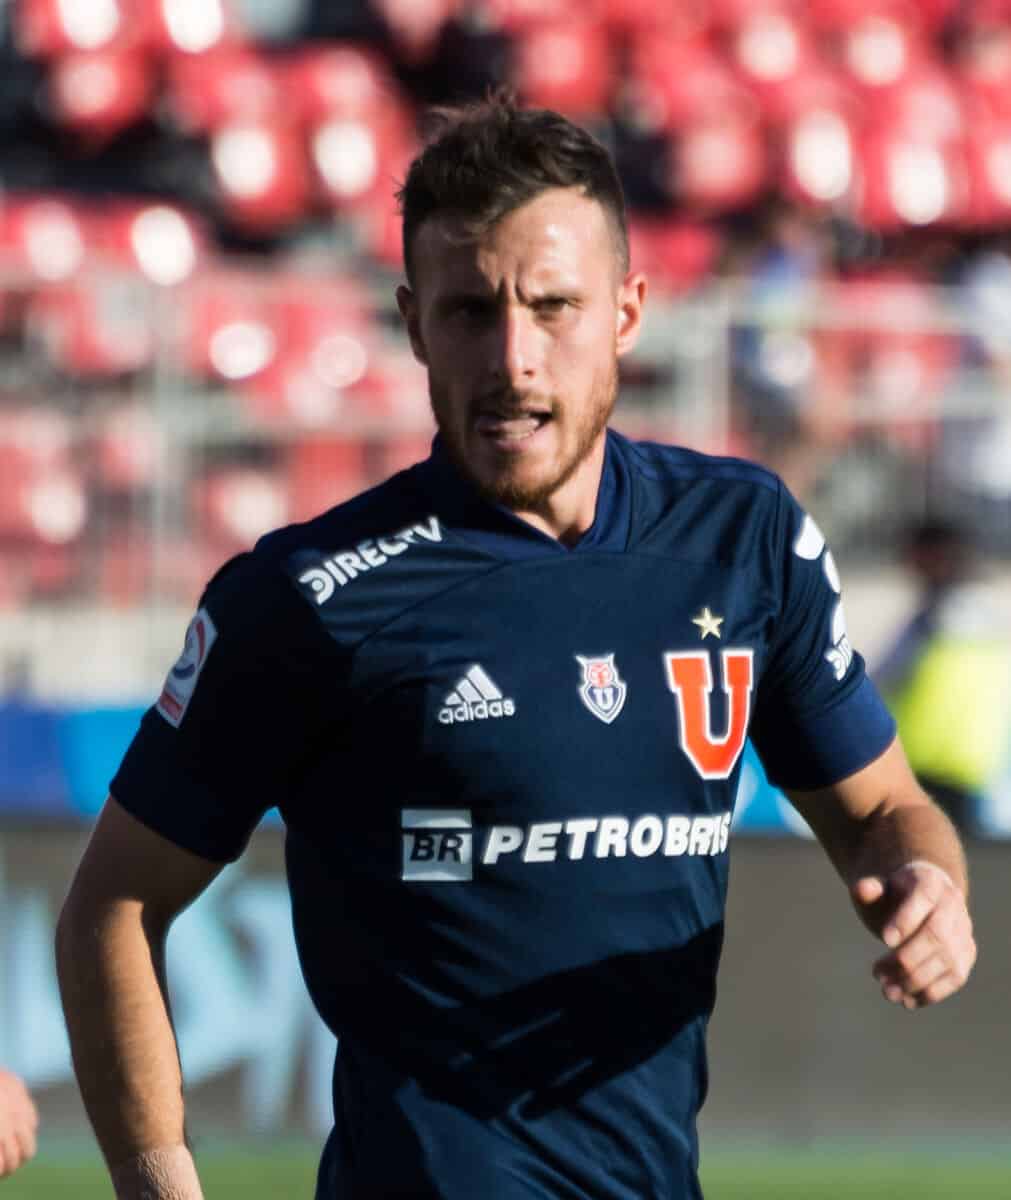 Ángelo Henríquez net worth in Football / Soccer category